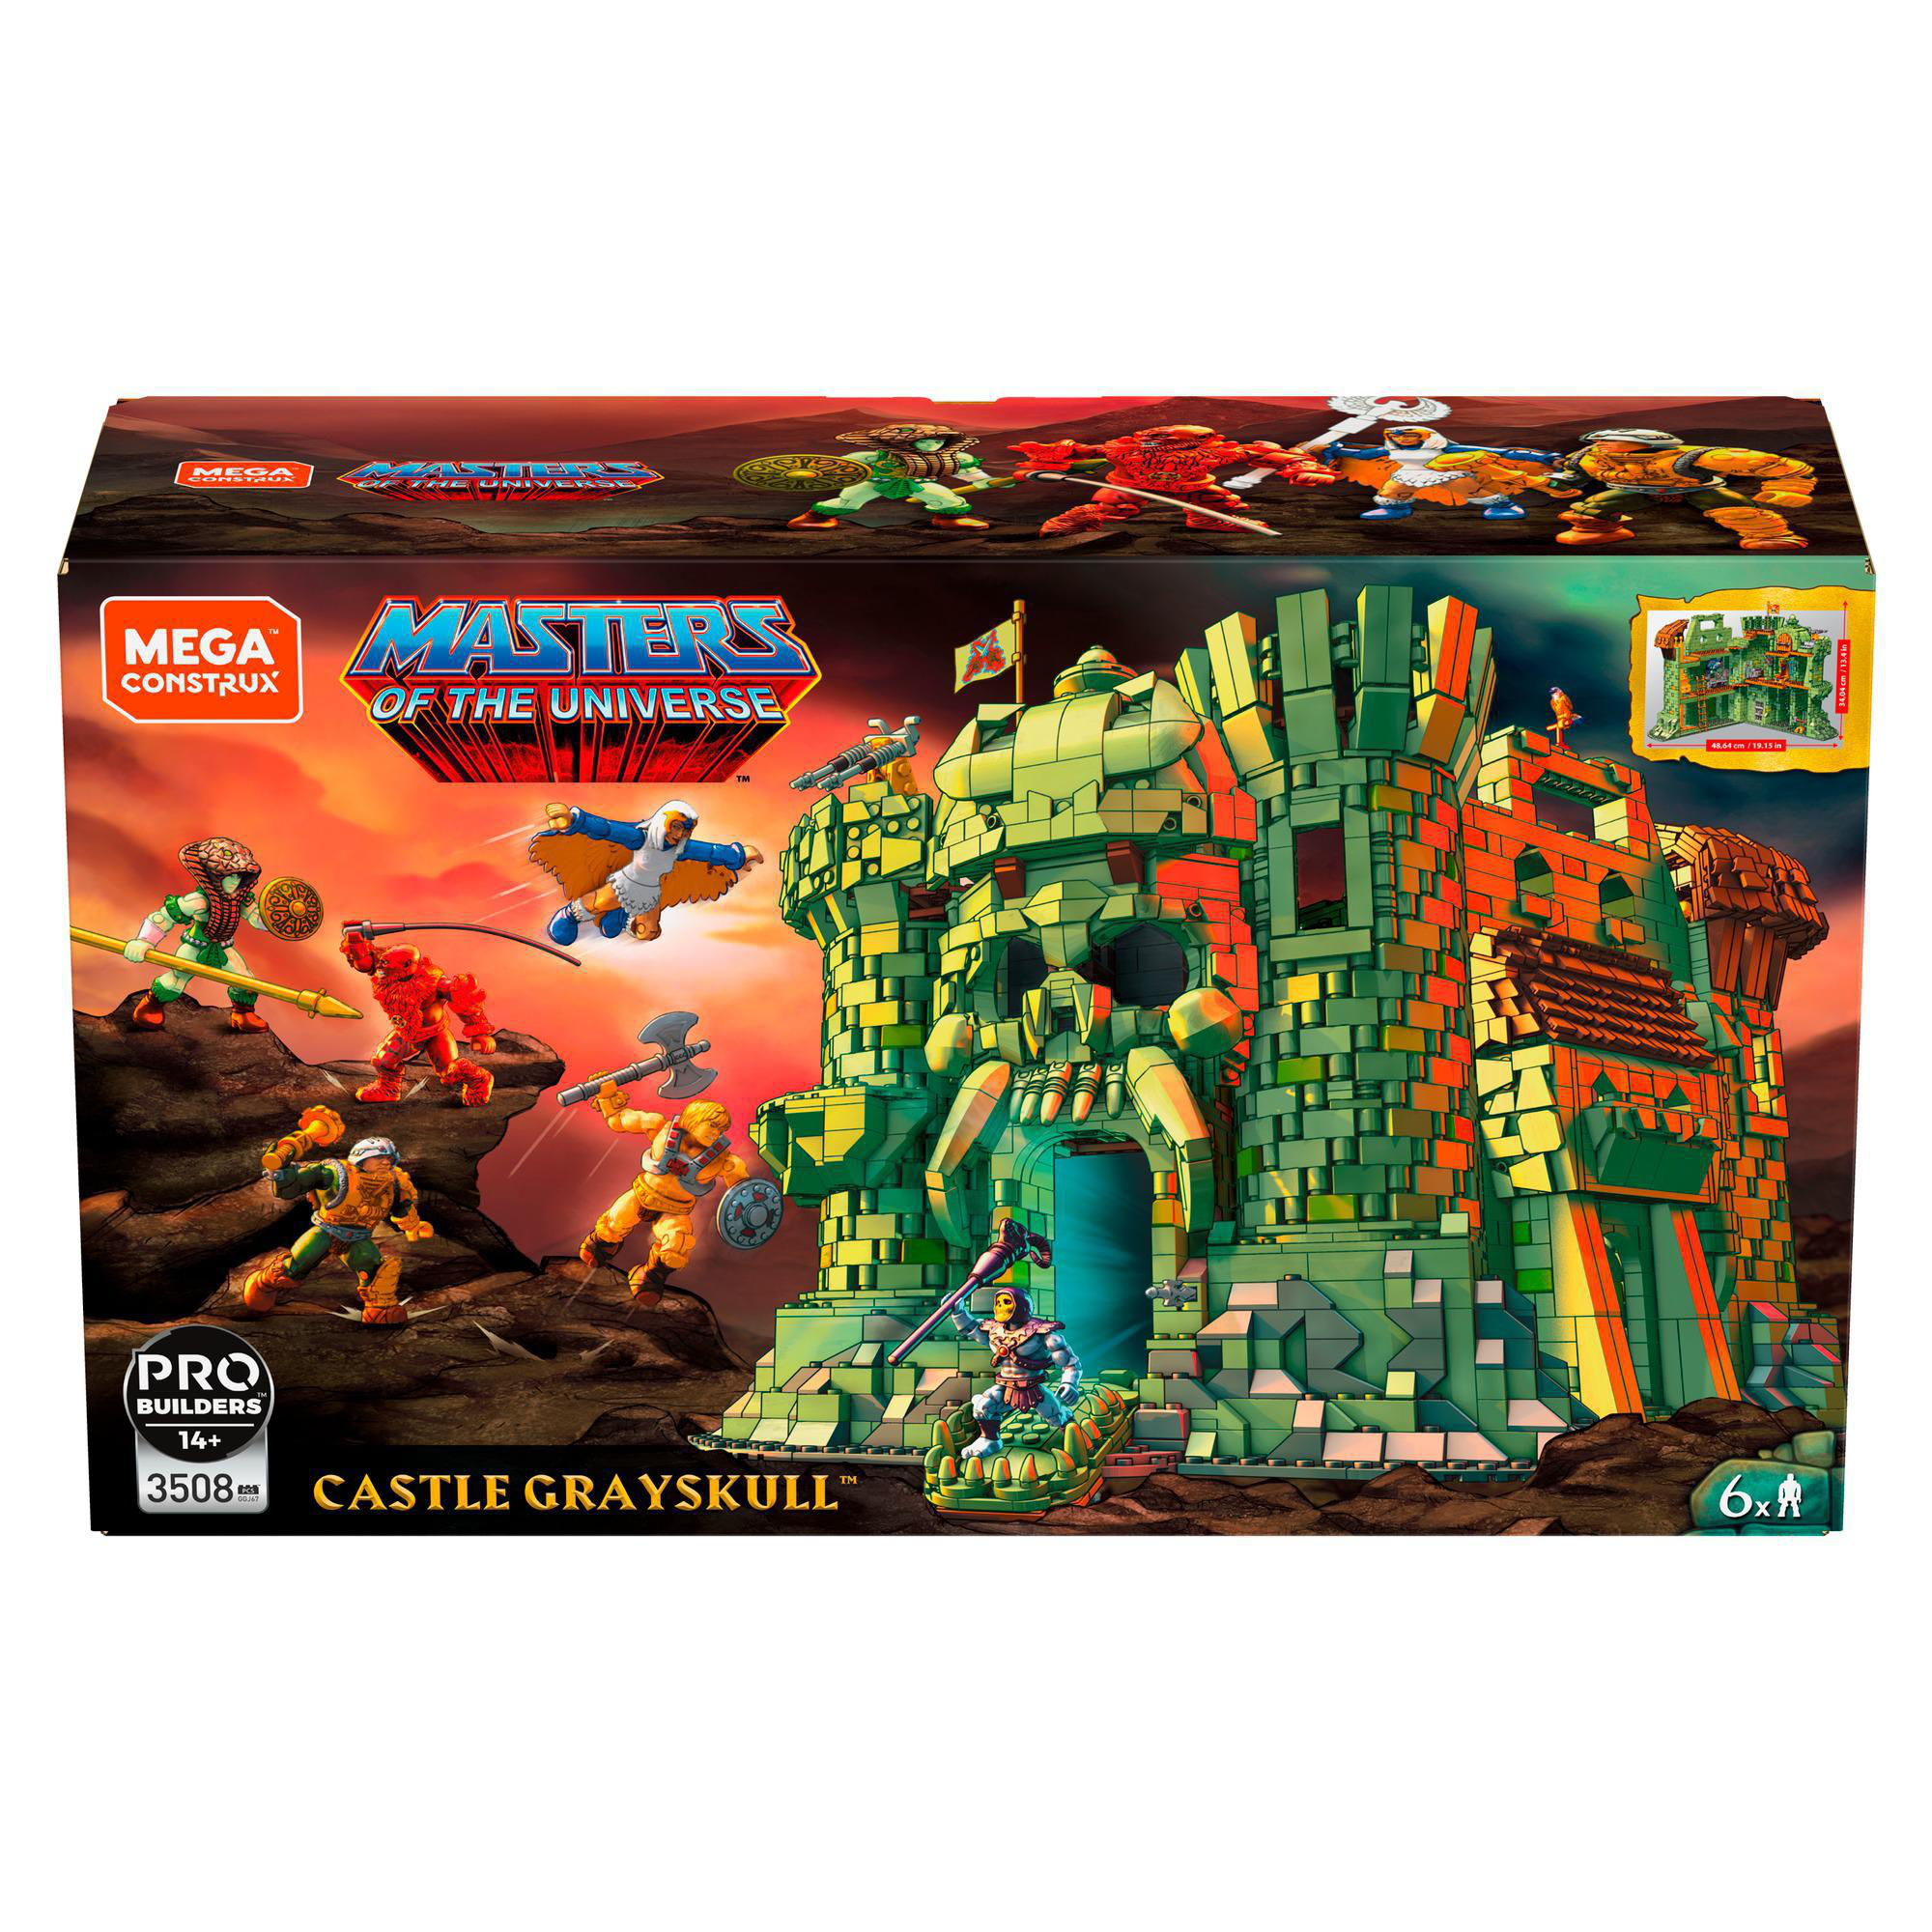 MEGA CONSTRUX Masters of Mehrfarbig Universe Castle Grayskull the Spielset